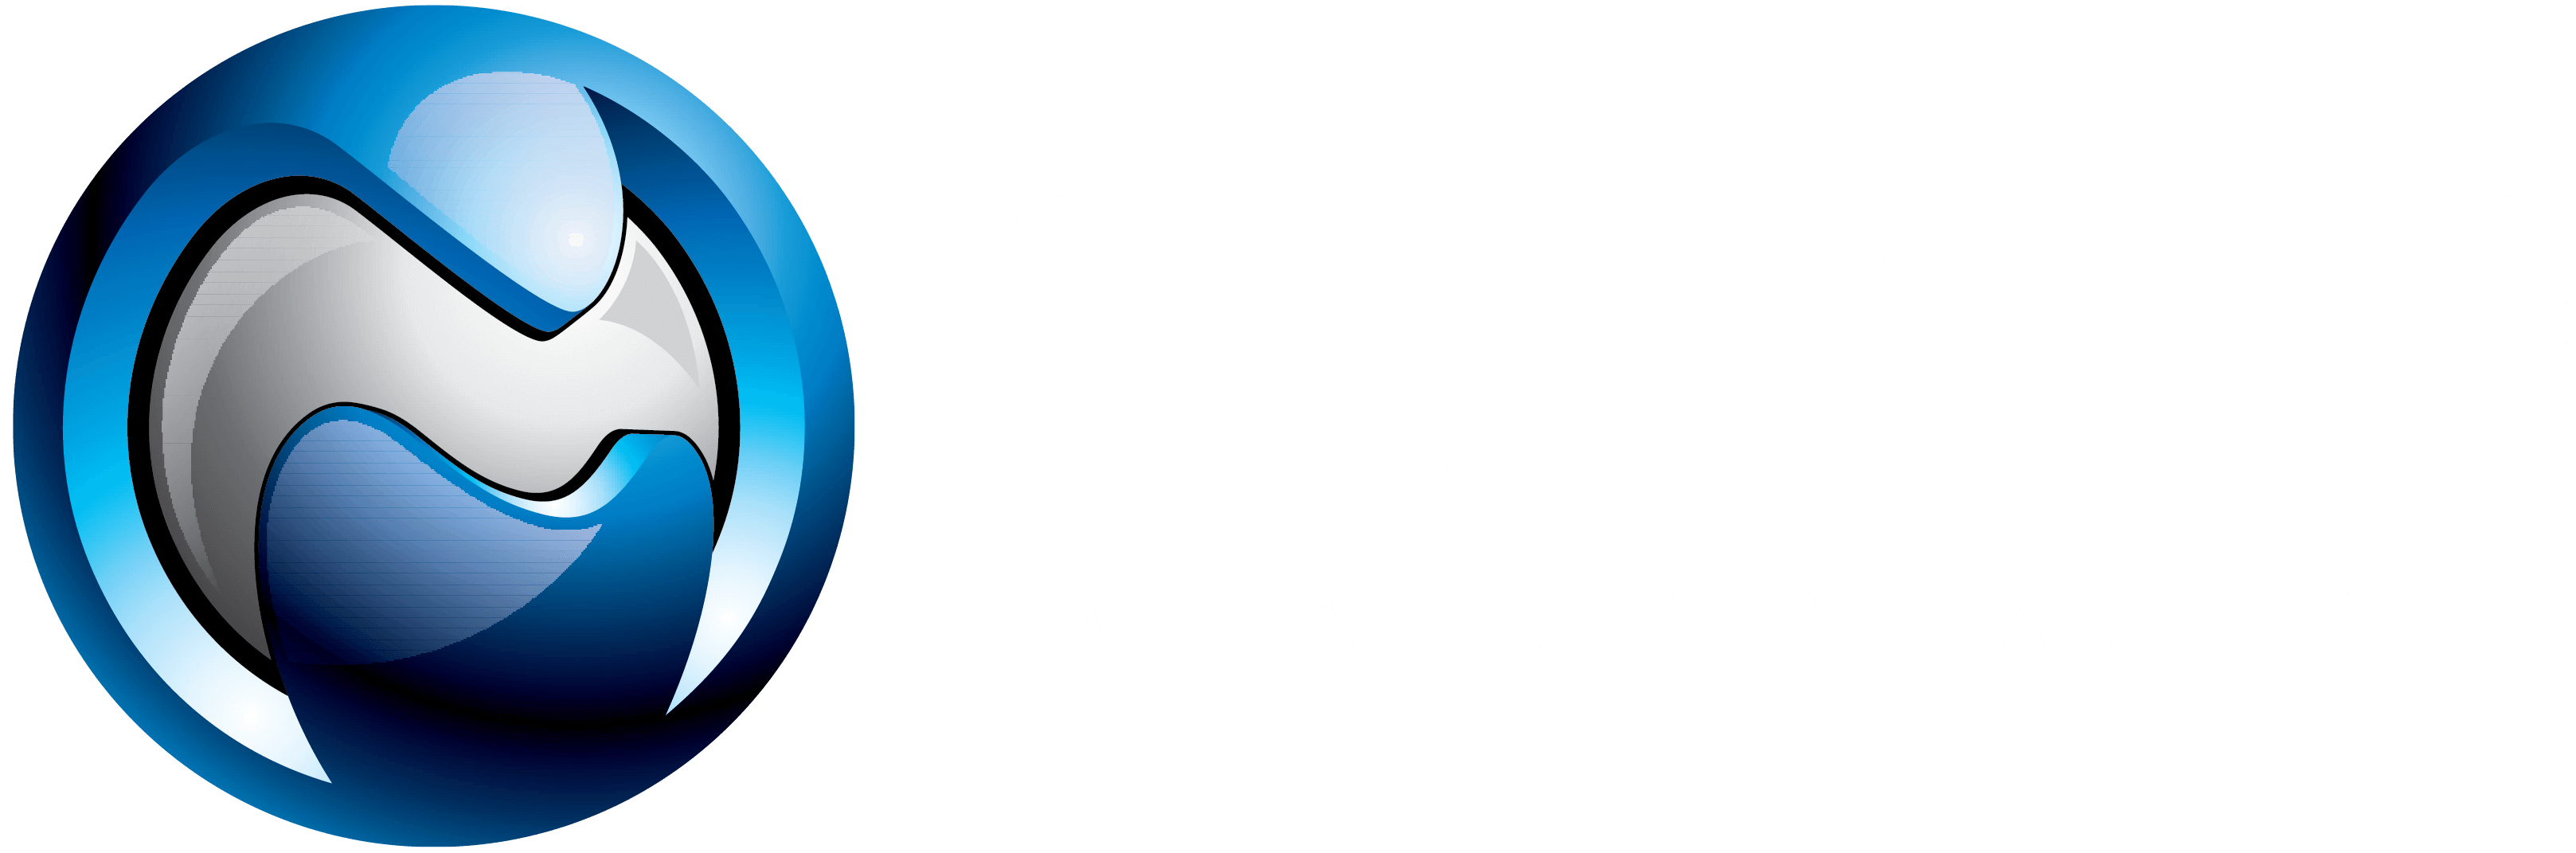 Contact Us Oneida Molded Plastics